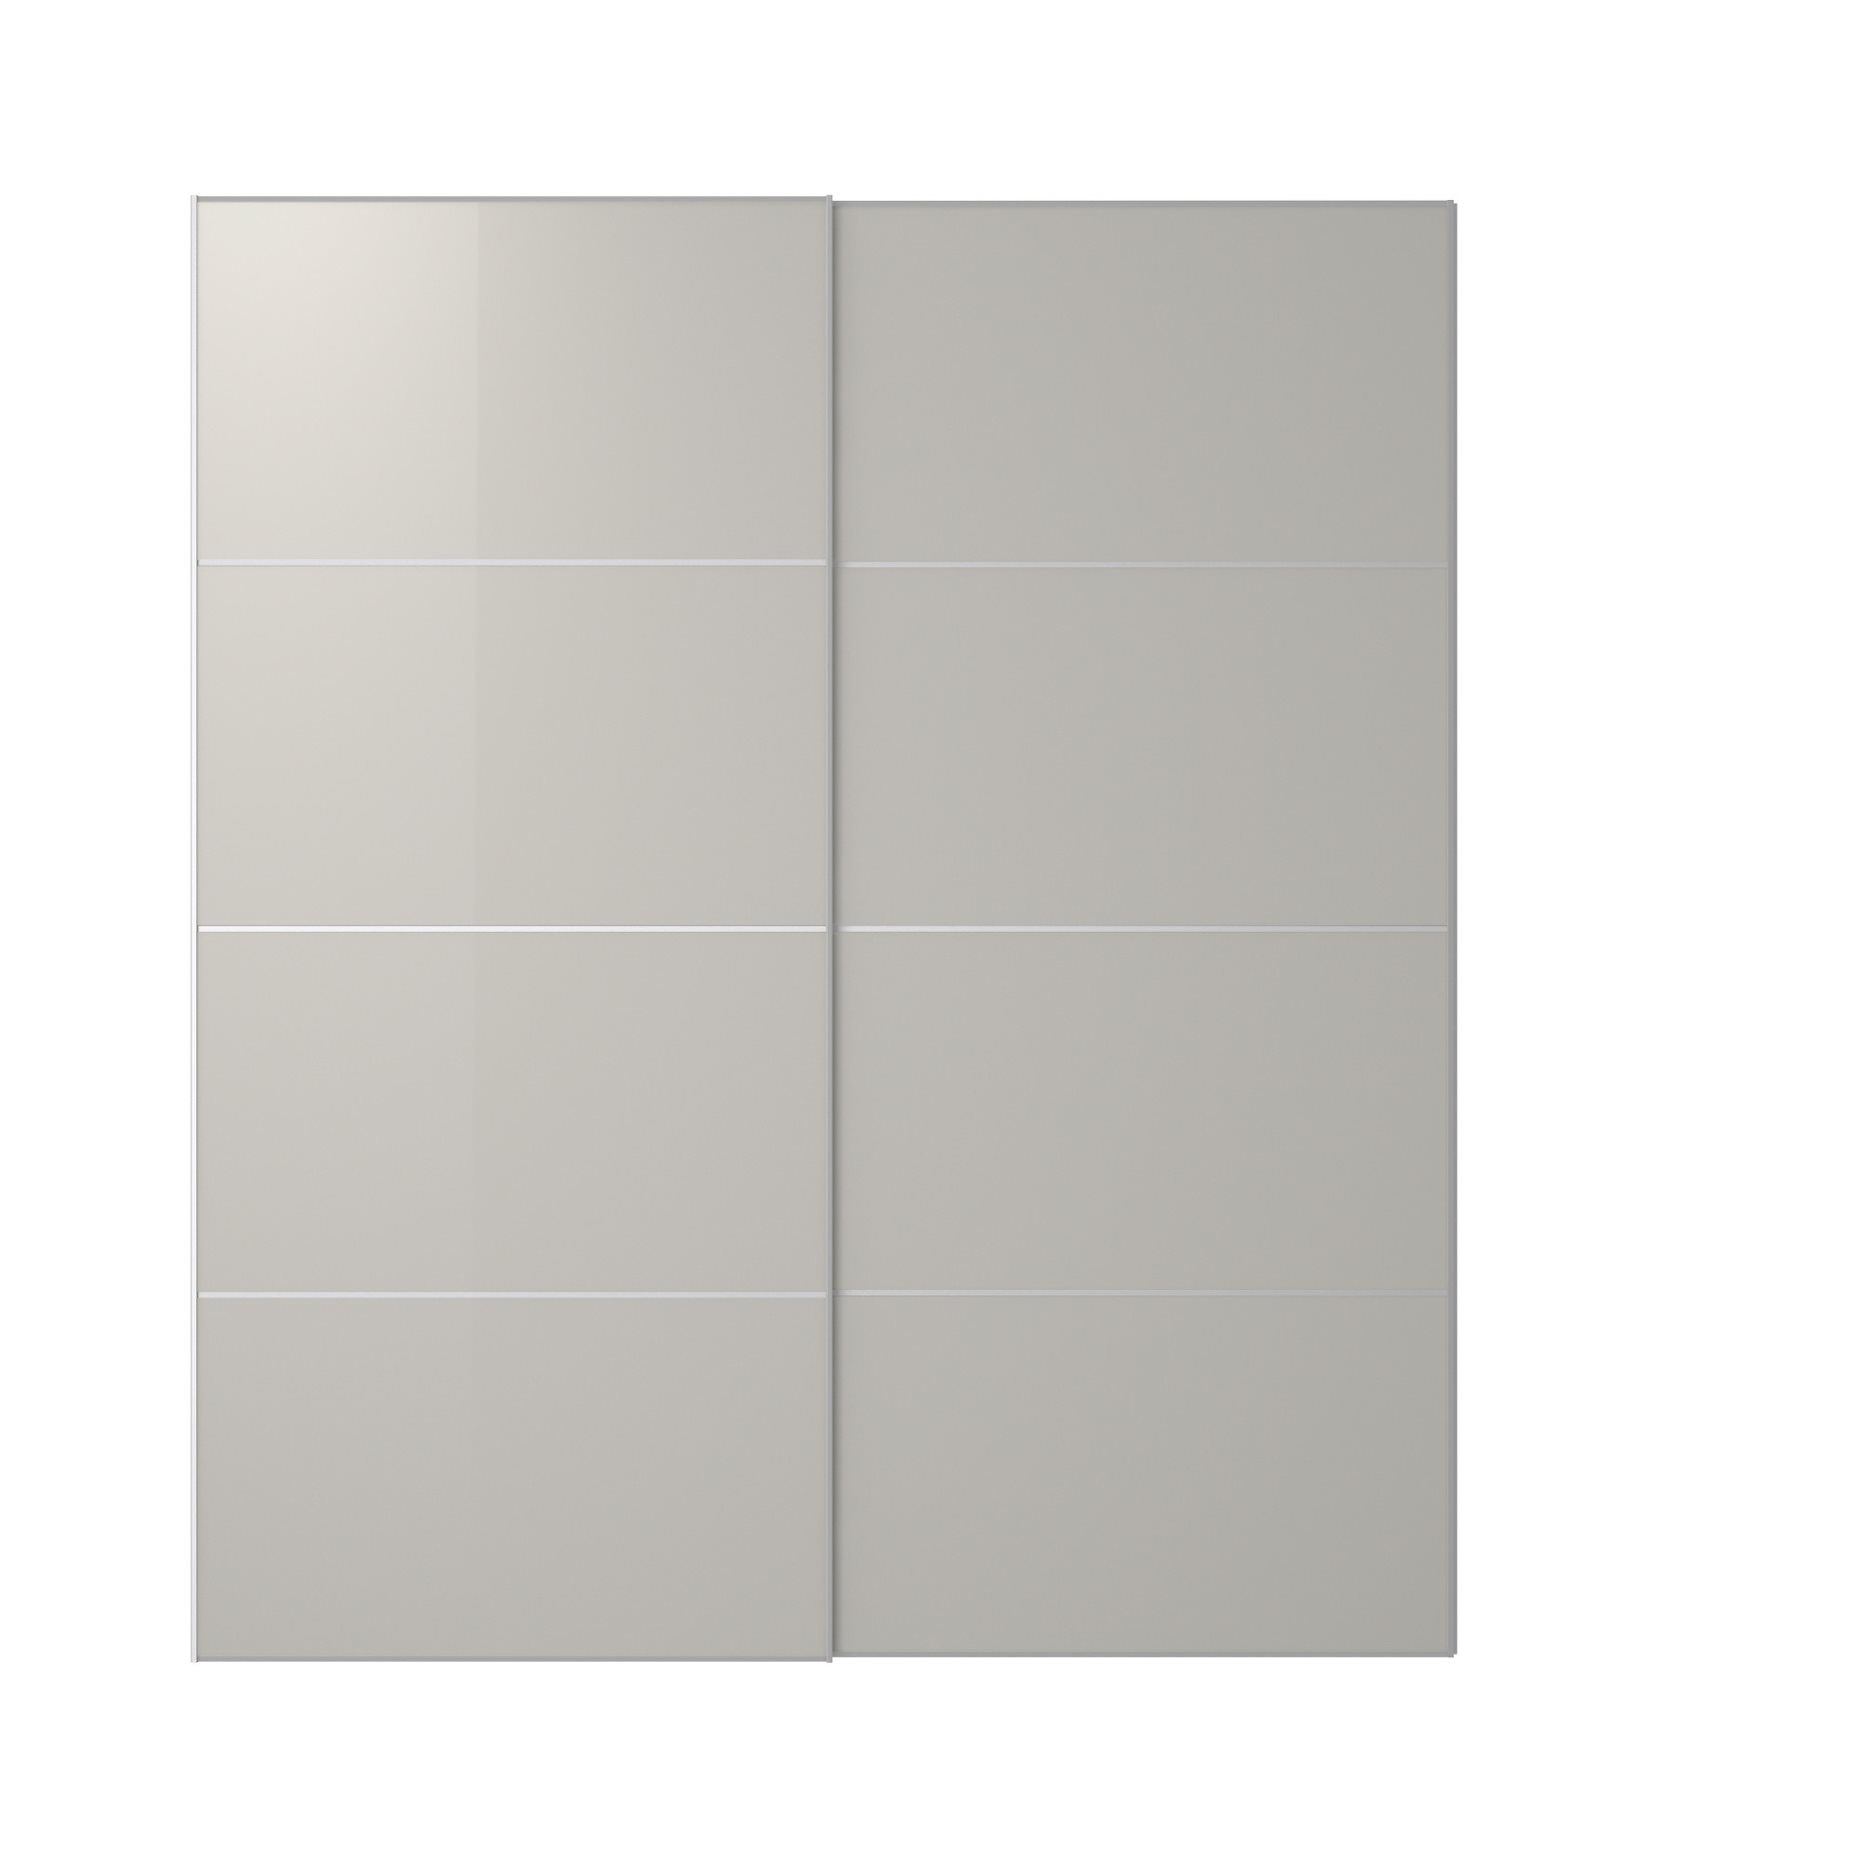 HOKKSUND, pair of sliding doors, 200x236 cm, 594.397.15